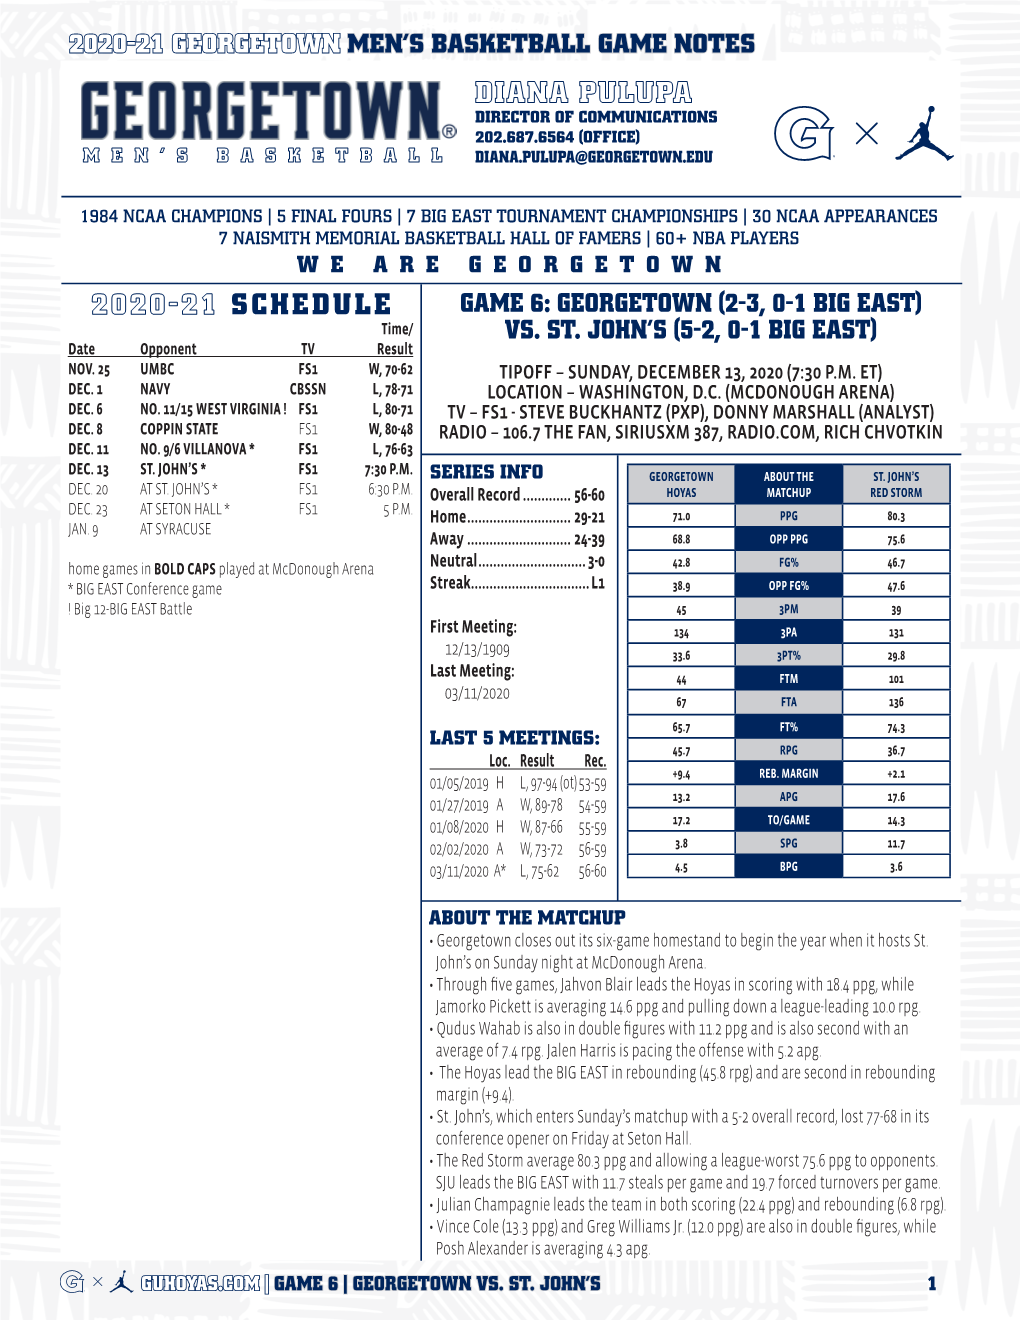 2020-21 Georgetown Men's Basketball Game Notes Patrick Ewing